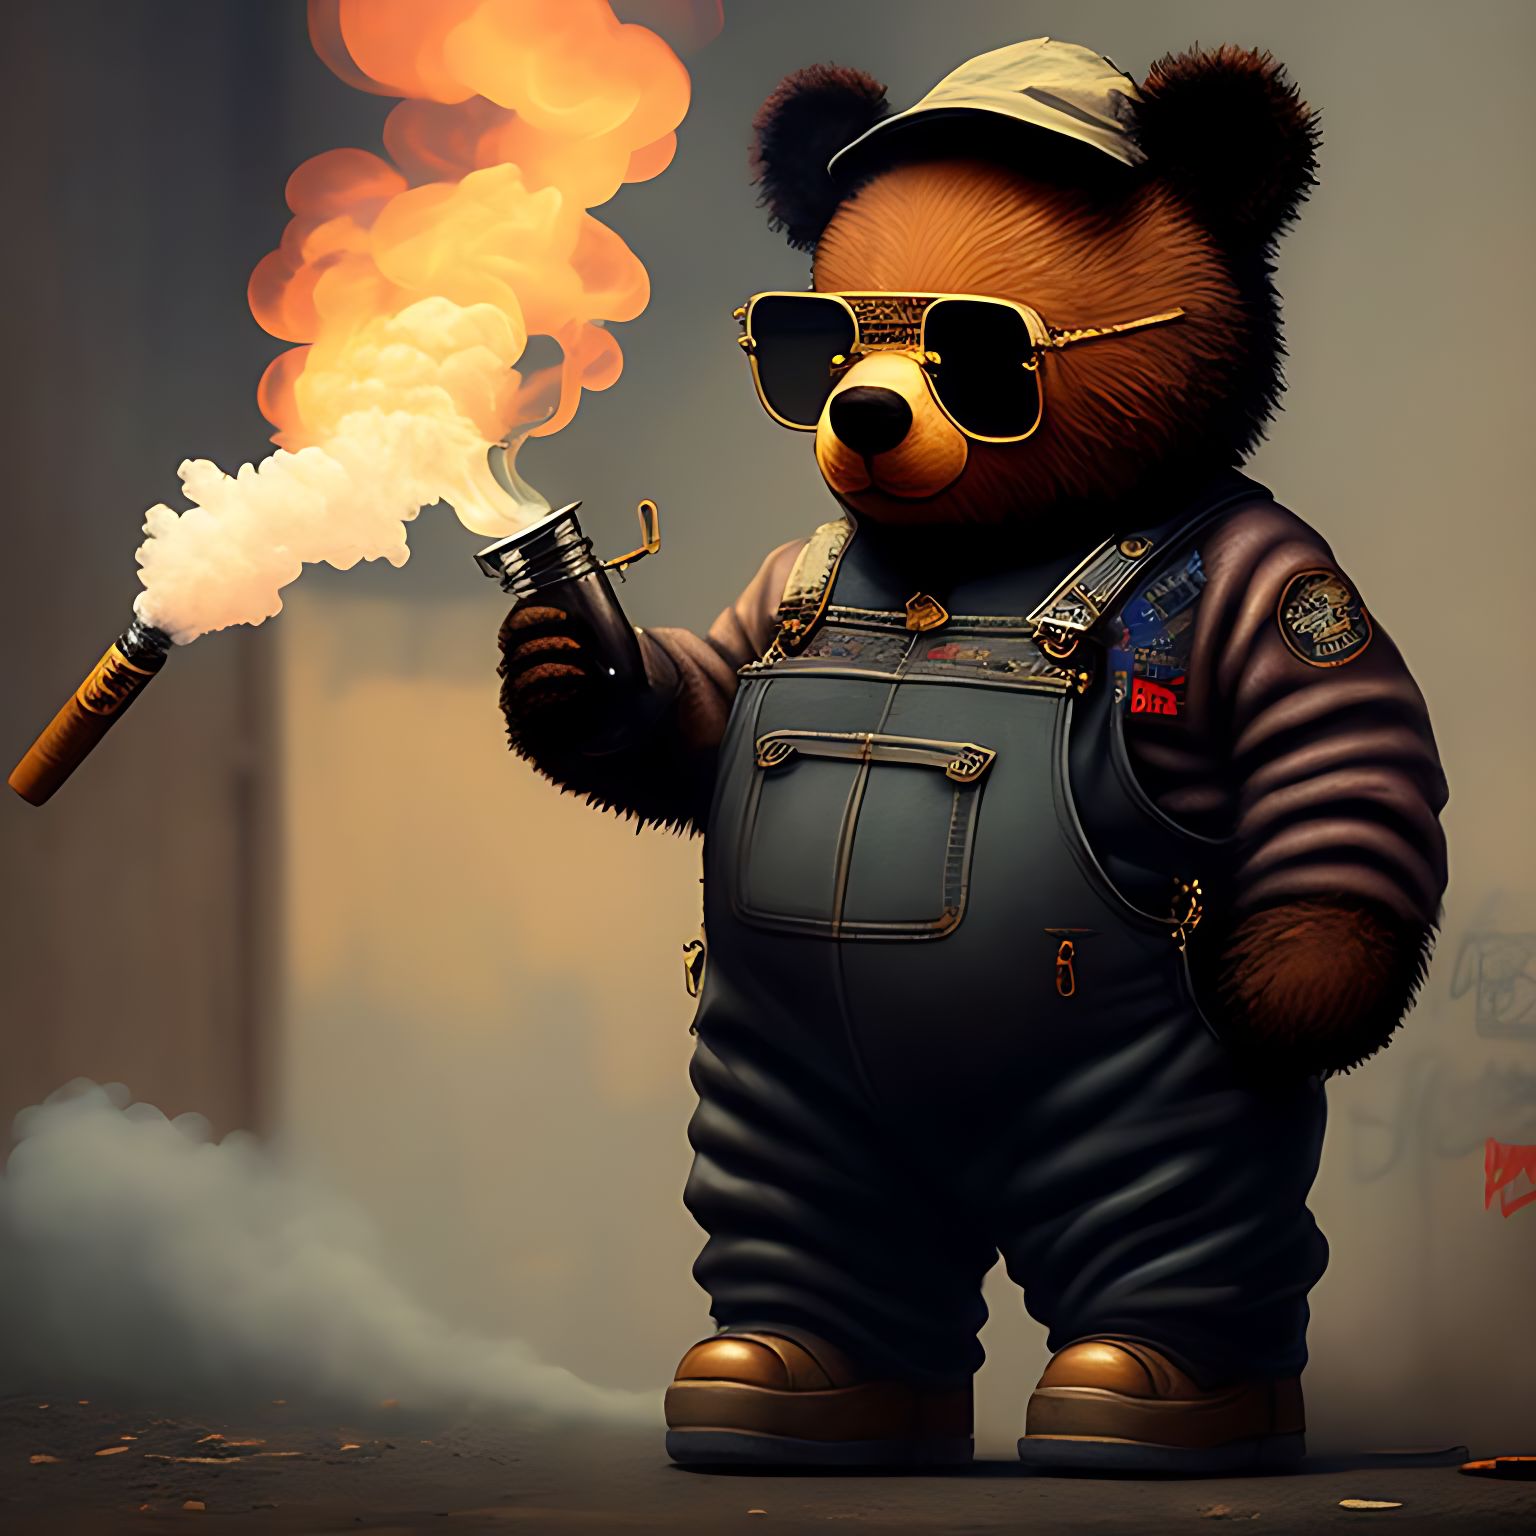 Smoke The Bear Animations